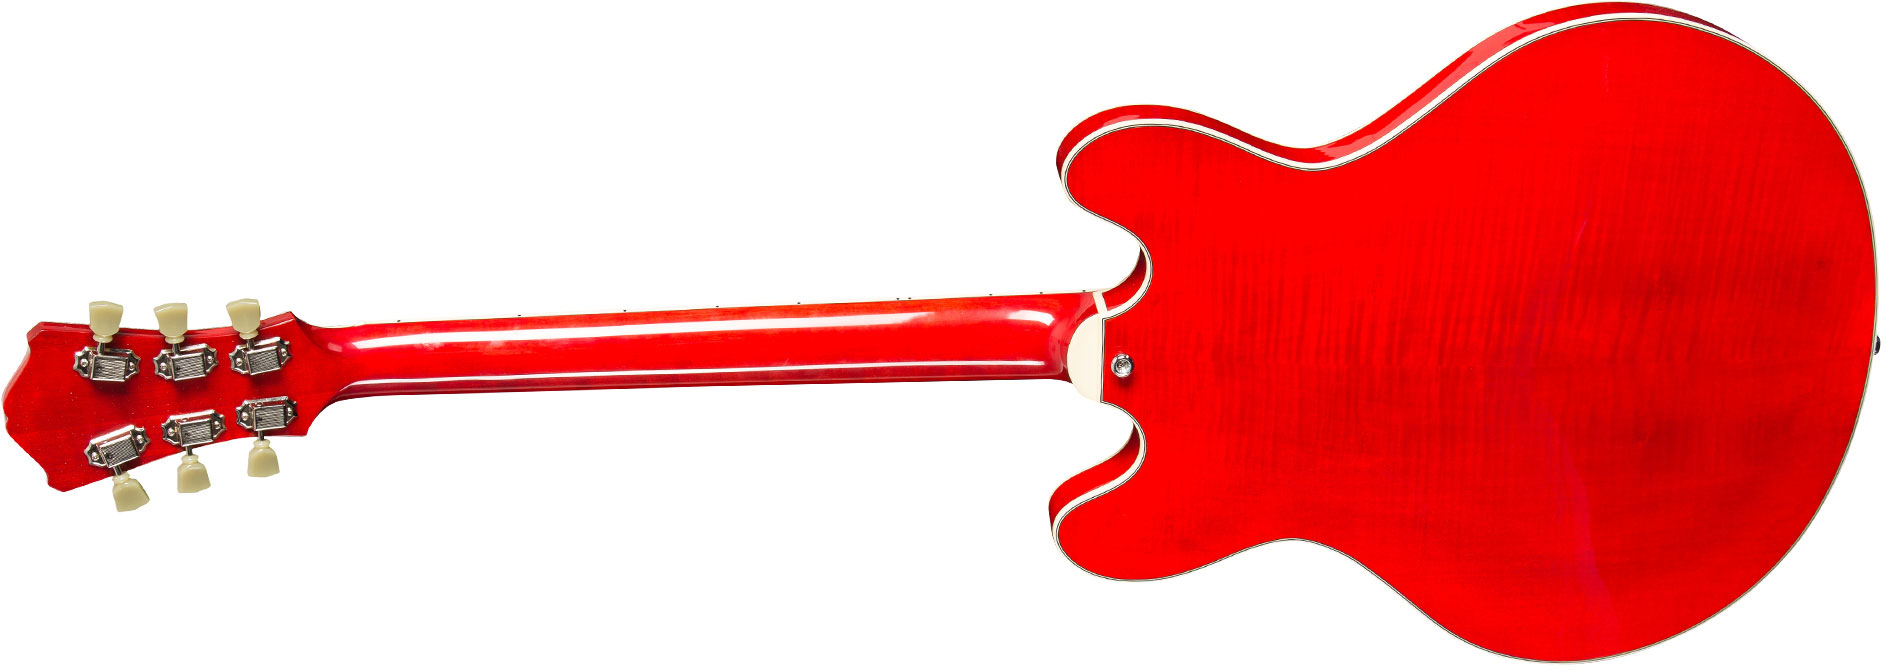 Eastman T486 Thinline Laminate Tout Erable Hh Seymour Duncan Ht Eb - Red - Semi hollow elektriche gitaar - Variation 1